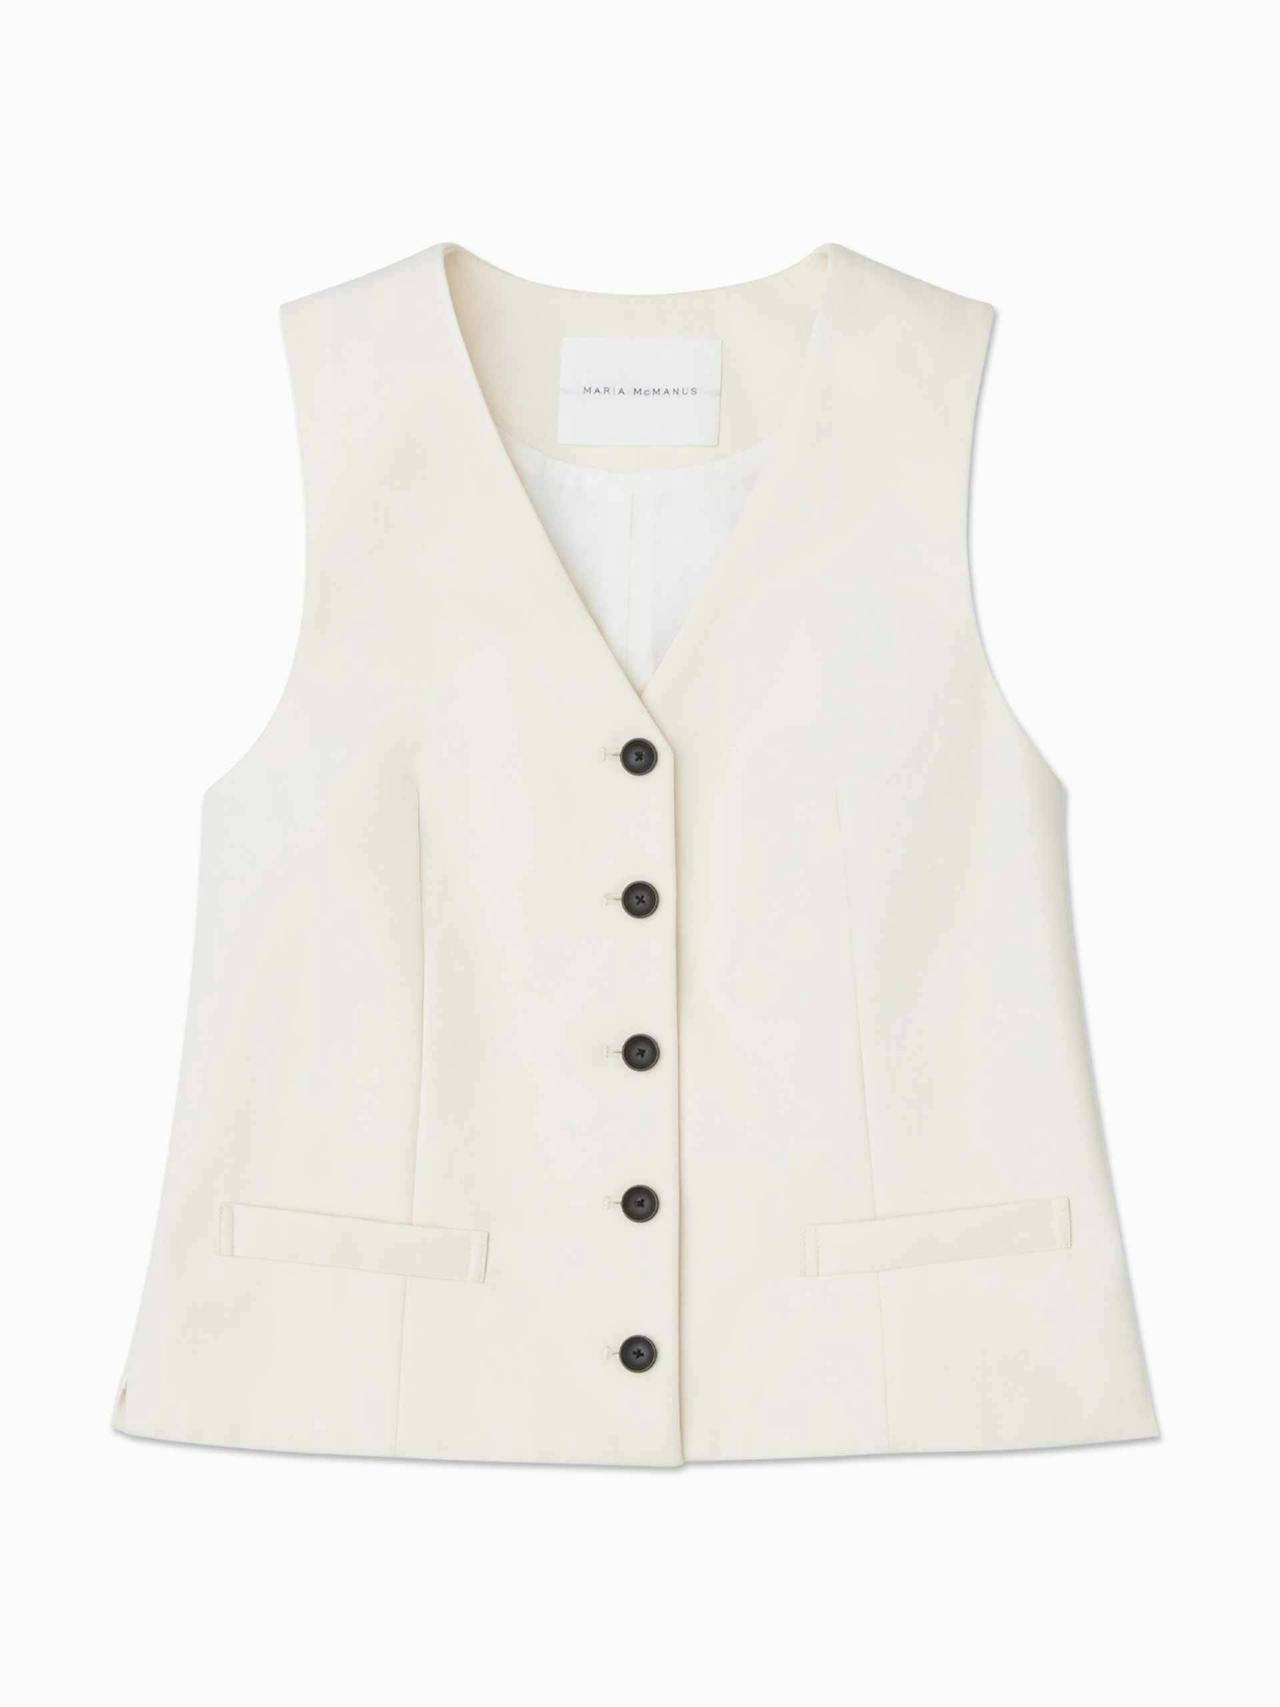 Ivory tailored vest